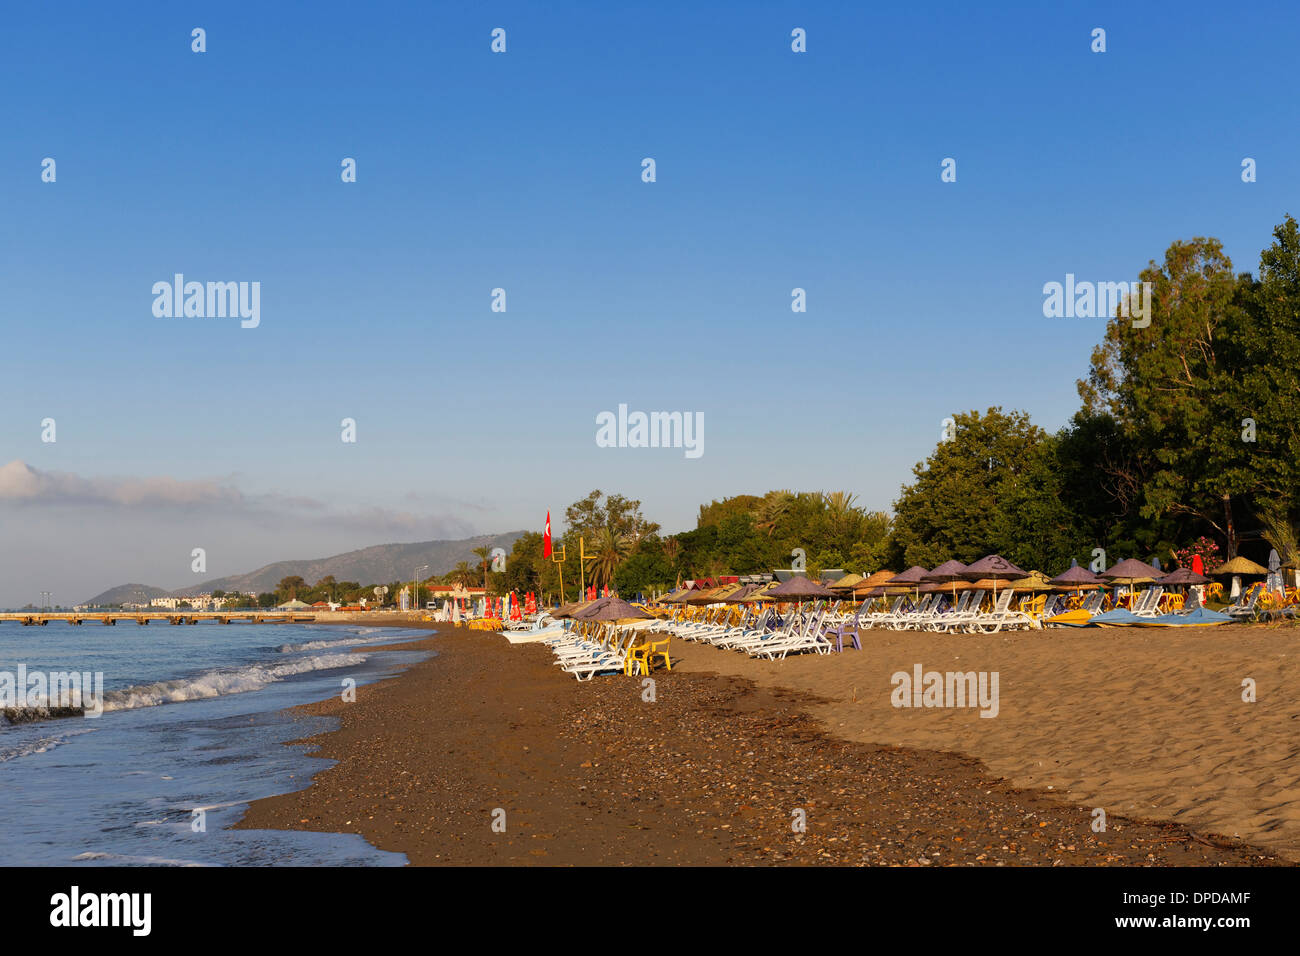 Turkey, Beach of Anamur in the morning Stock Photo